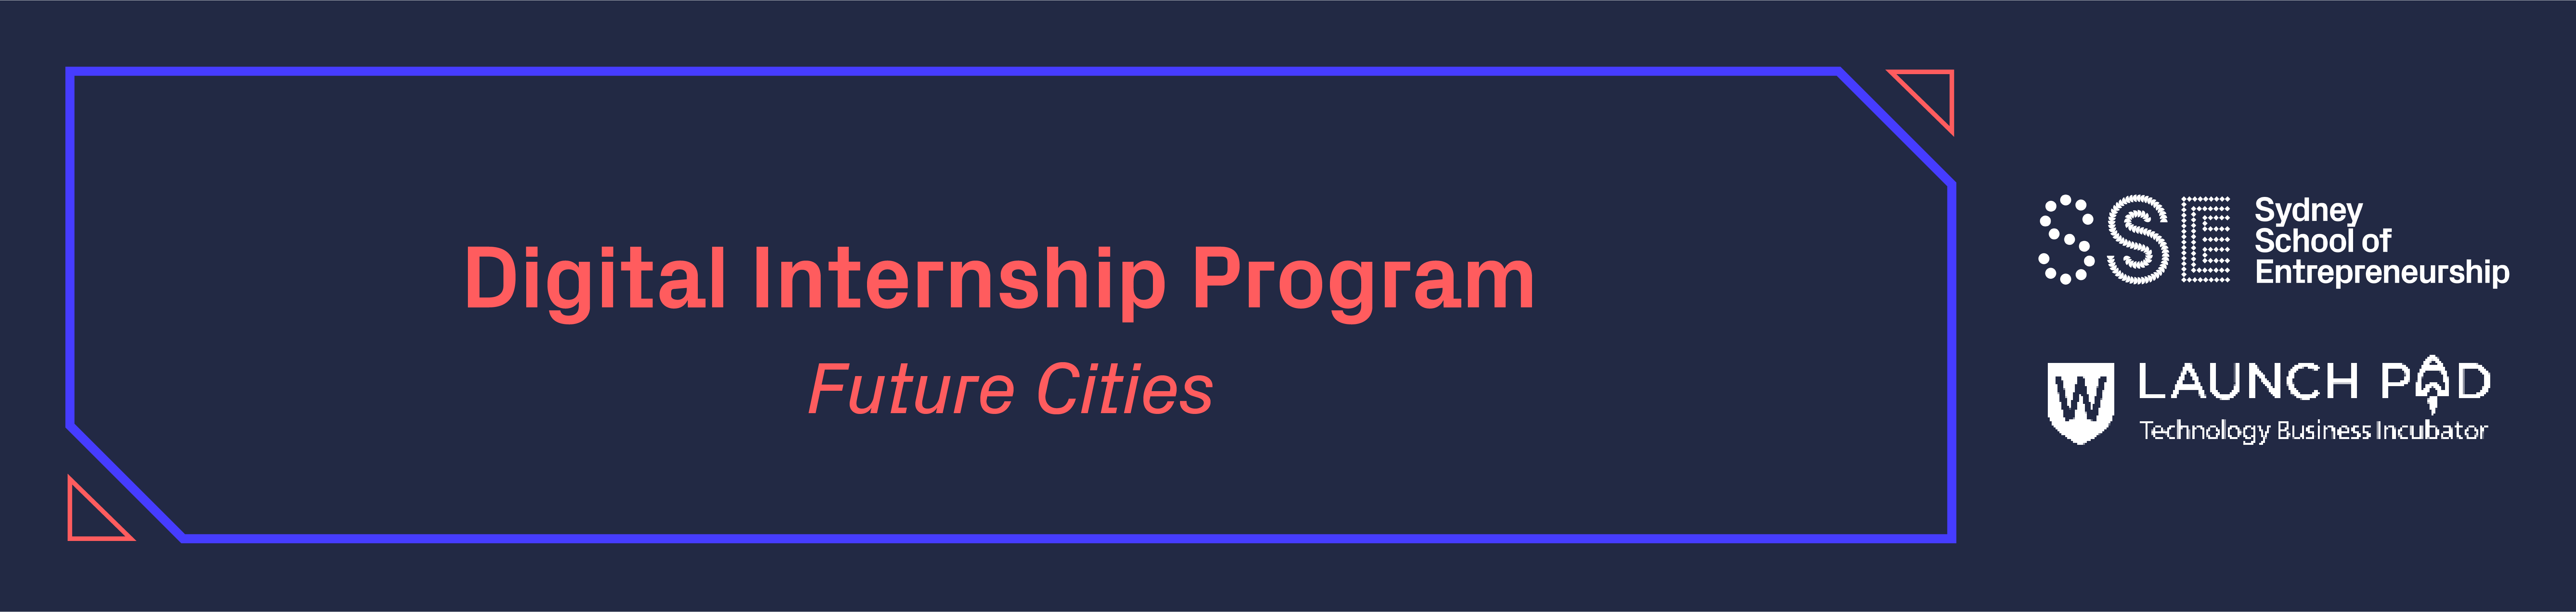 Digital Internship Program Future Cities